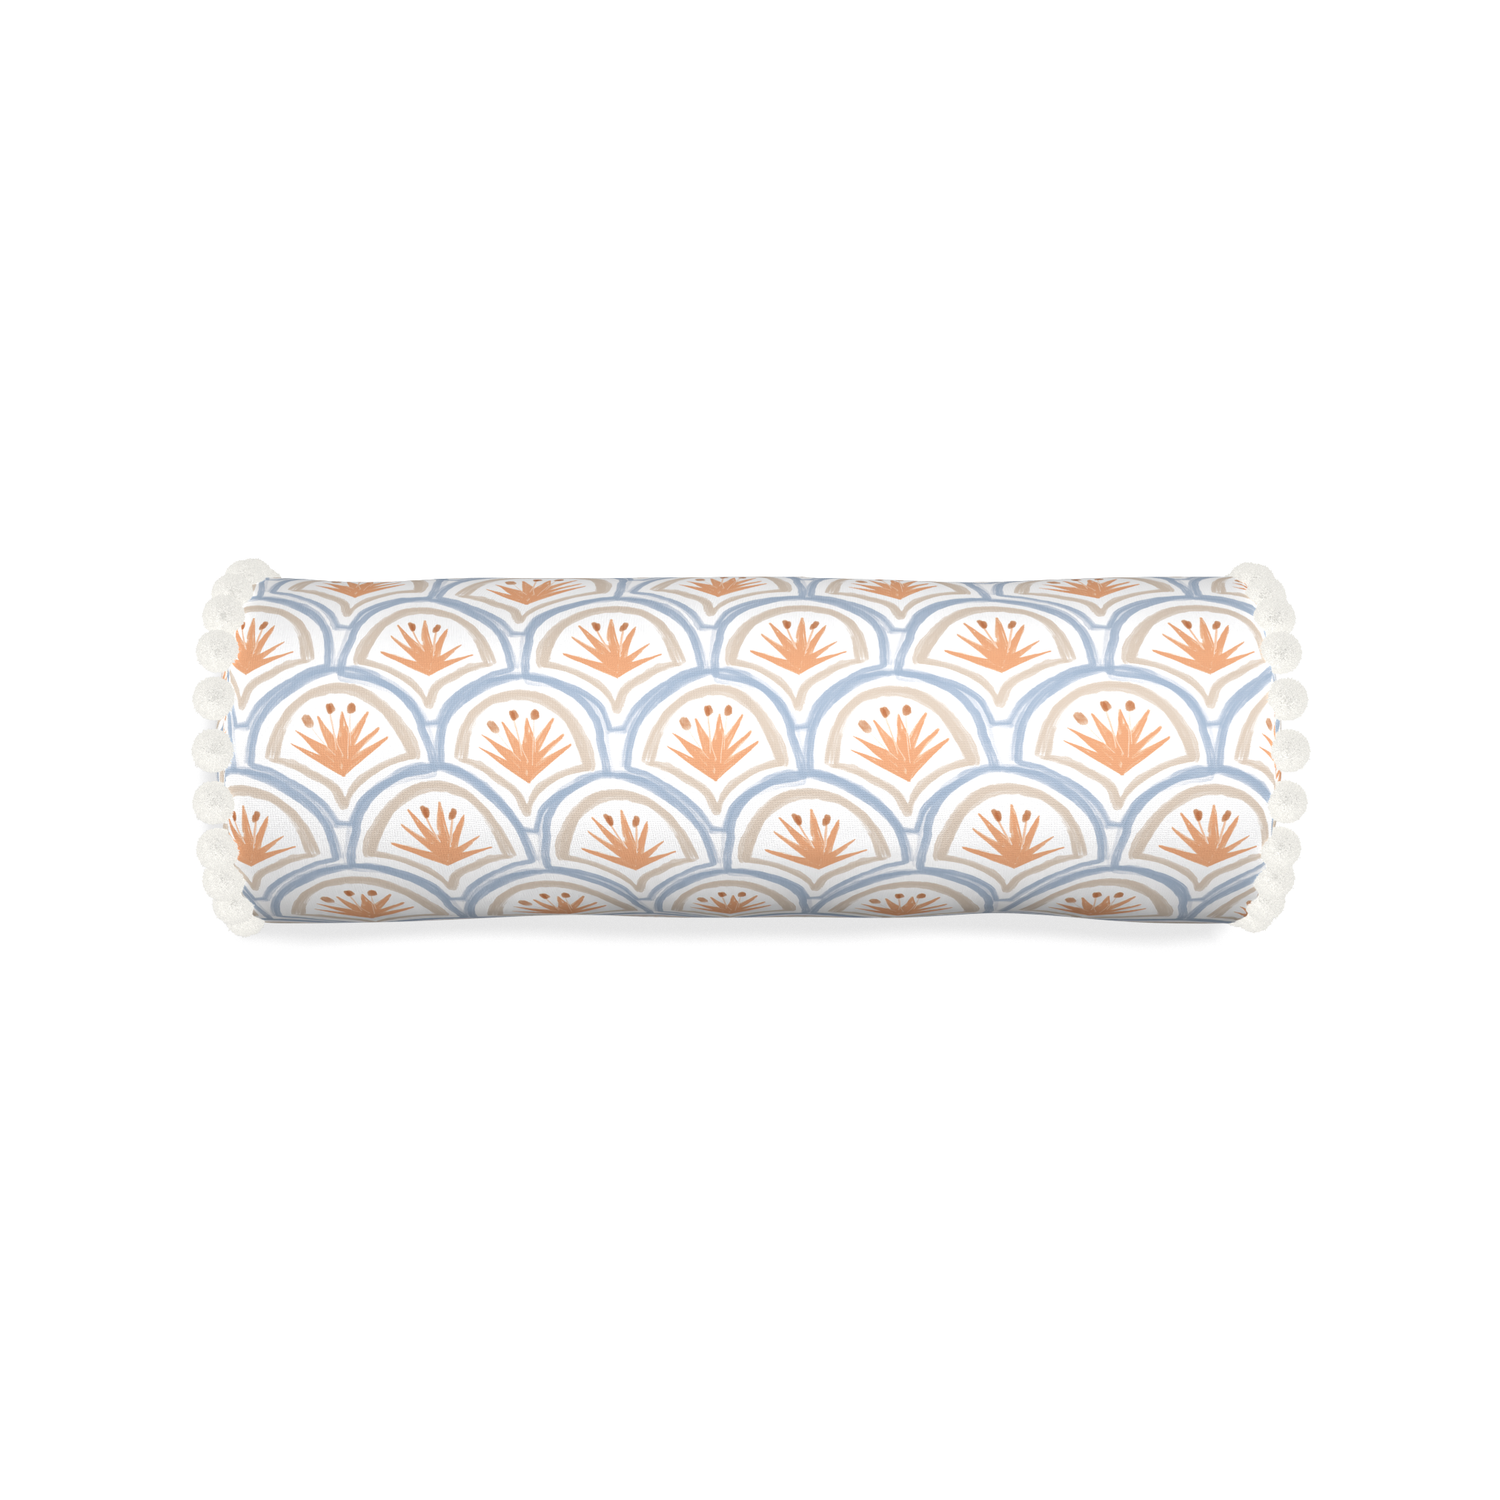 Bolster thatcher apricot custom pillow with snow pom pom on white background